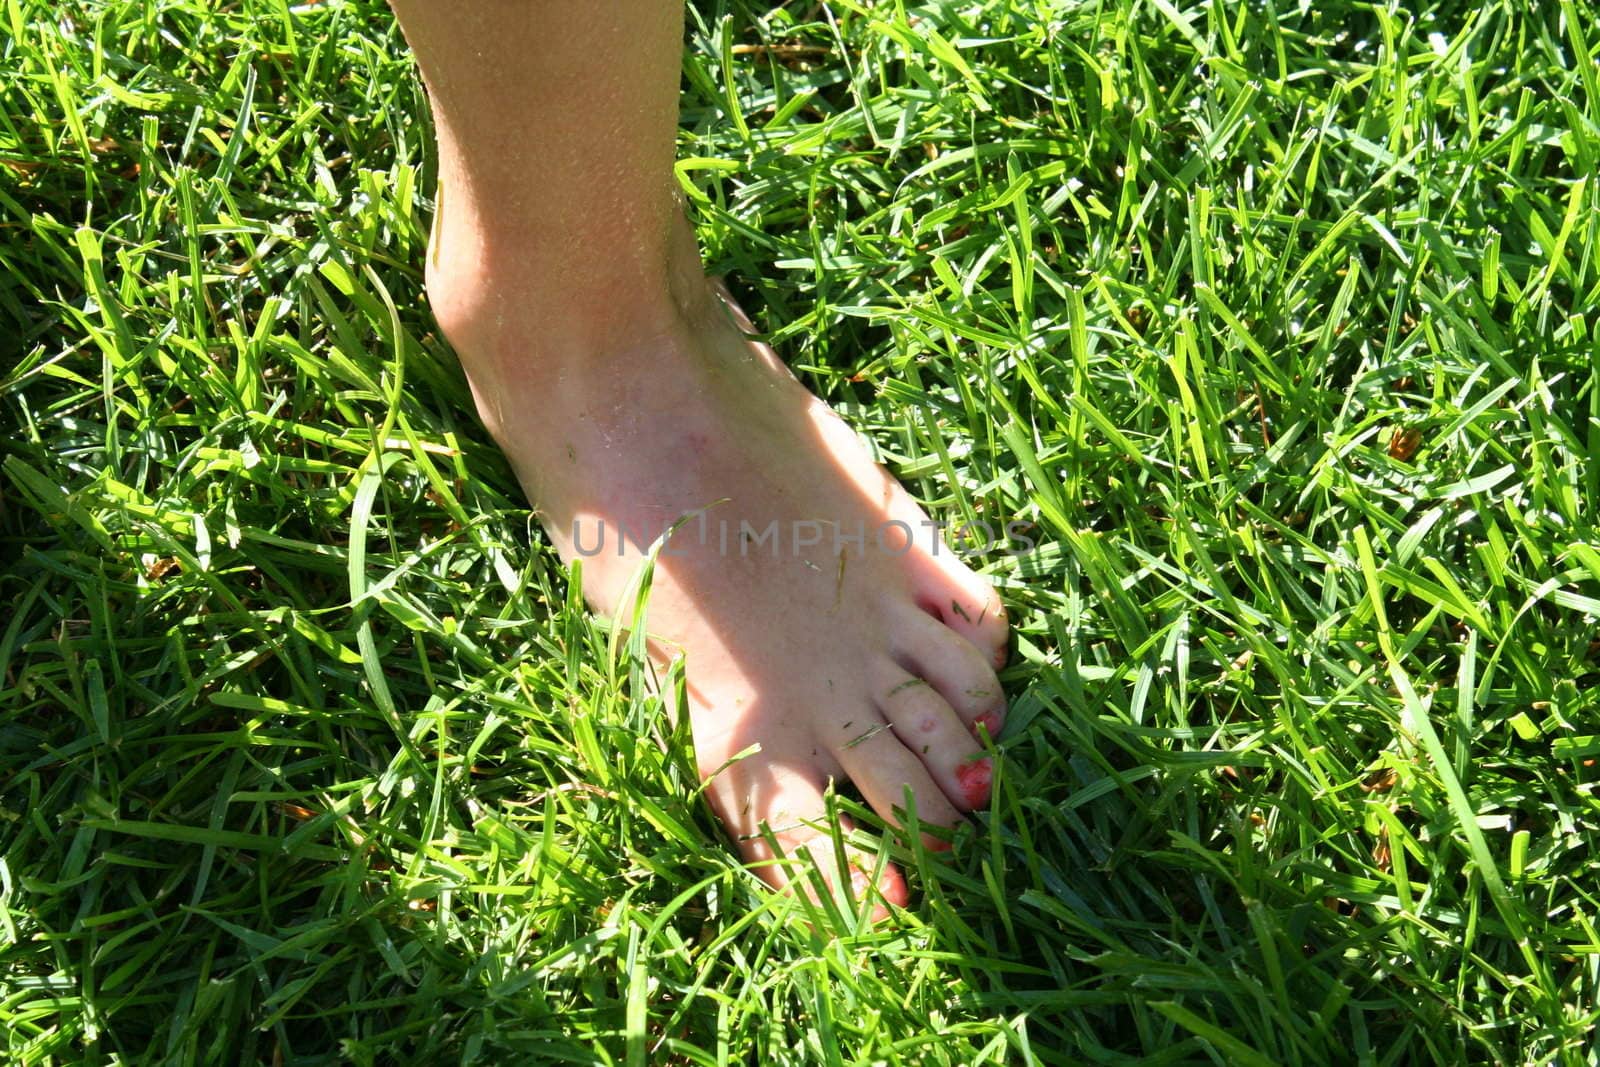 Human foot in grass